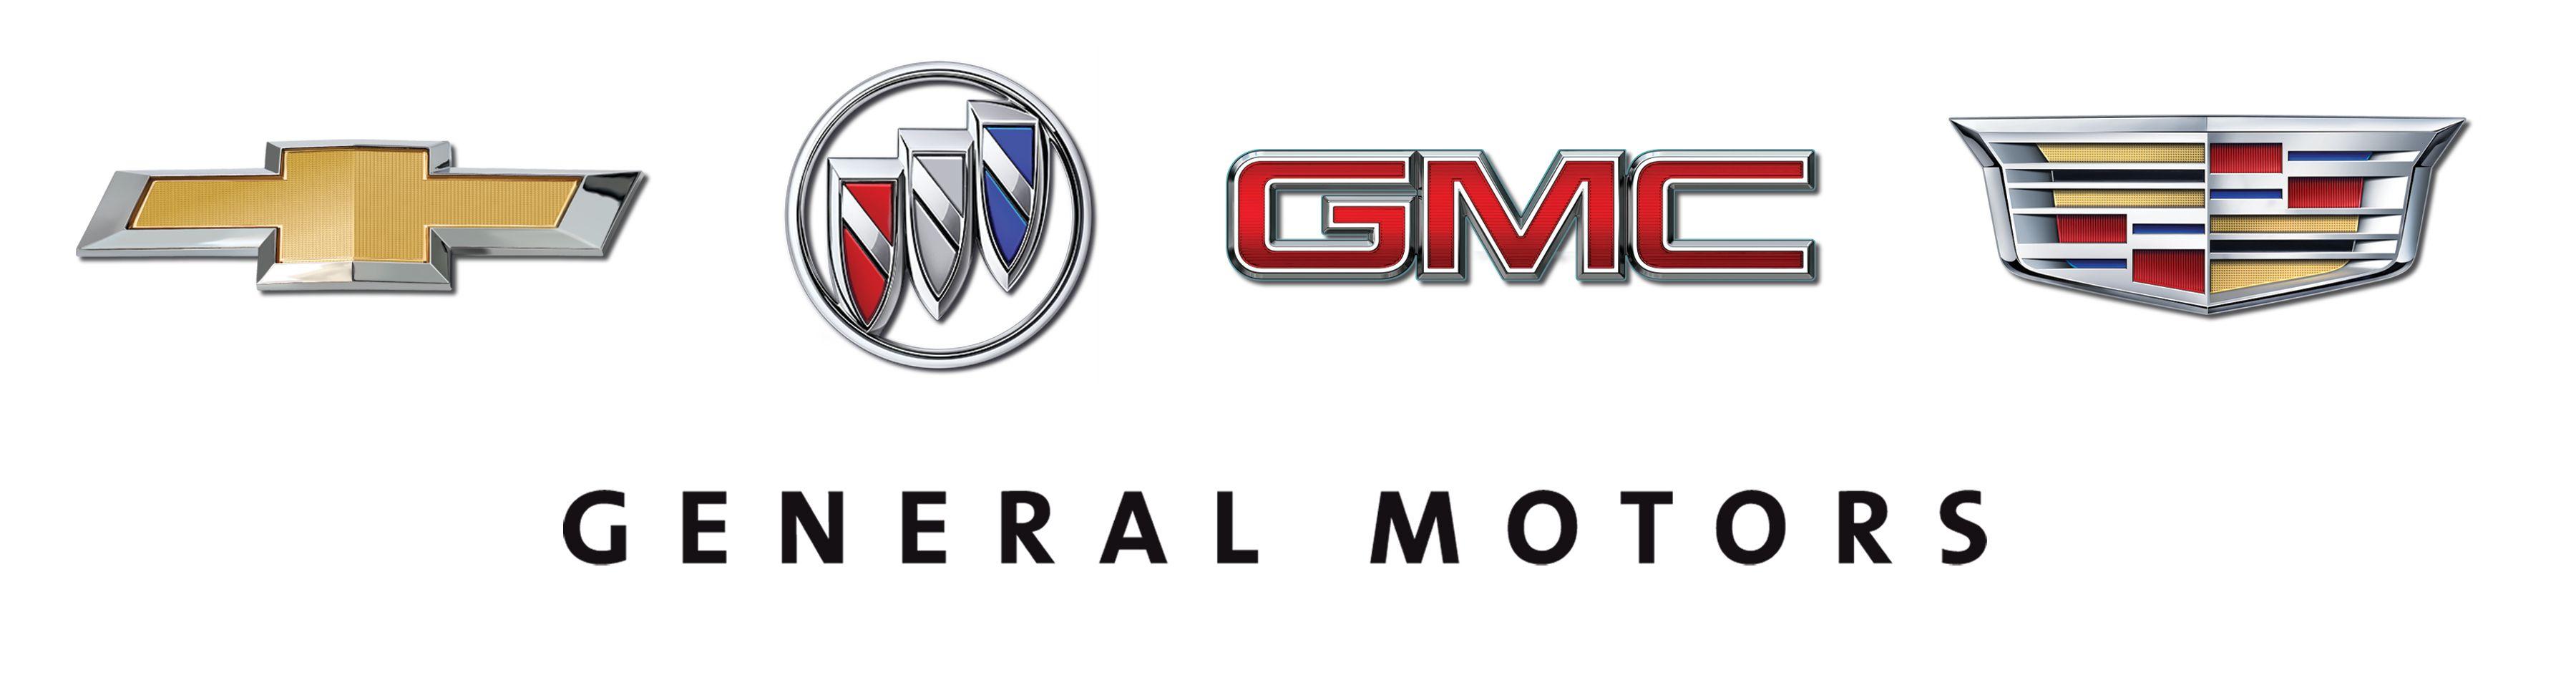 GM Logo - GM Corporate Newsroom - United States - Images